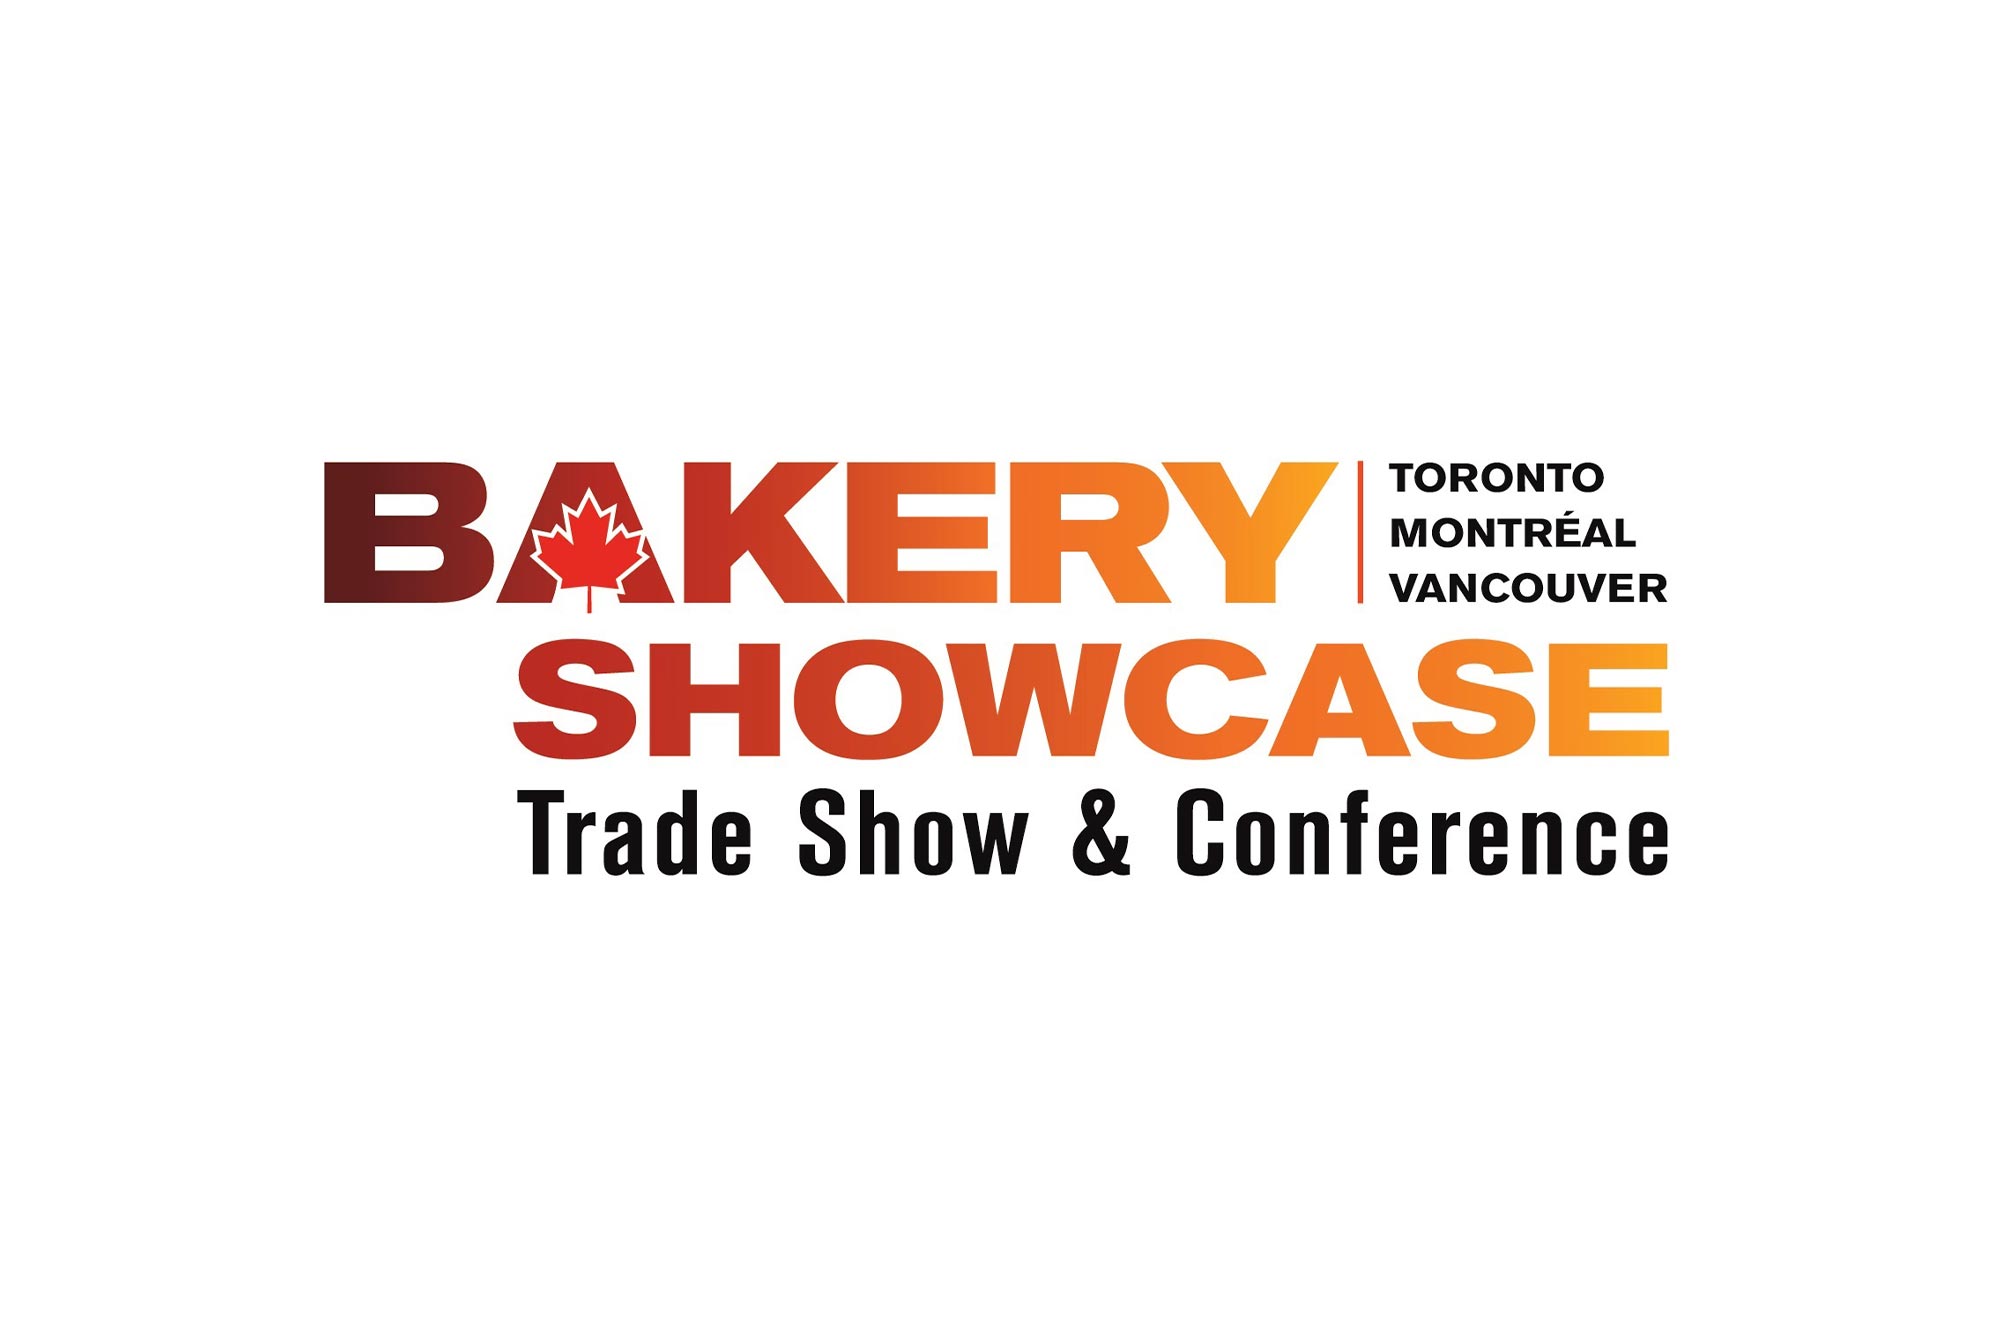 Bakery Showcase logo